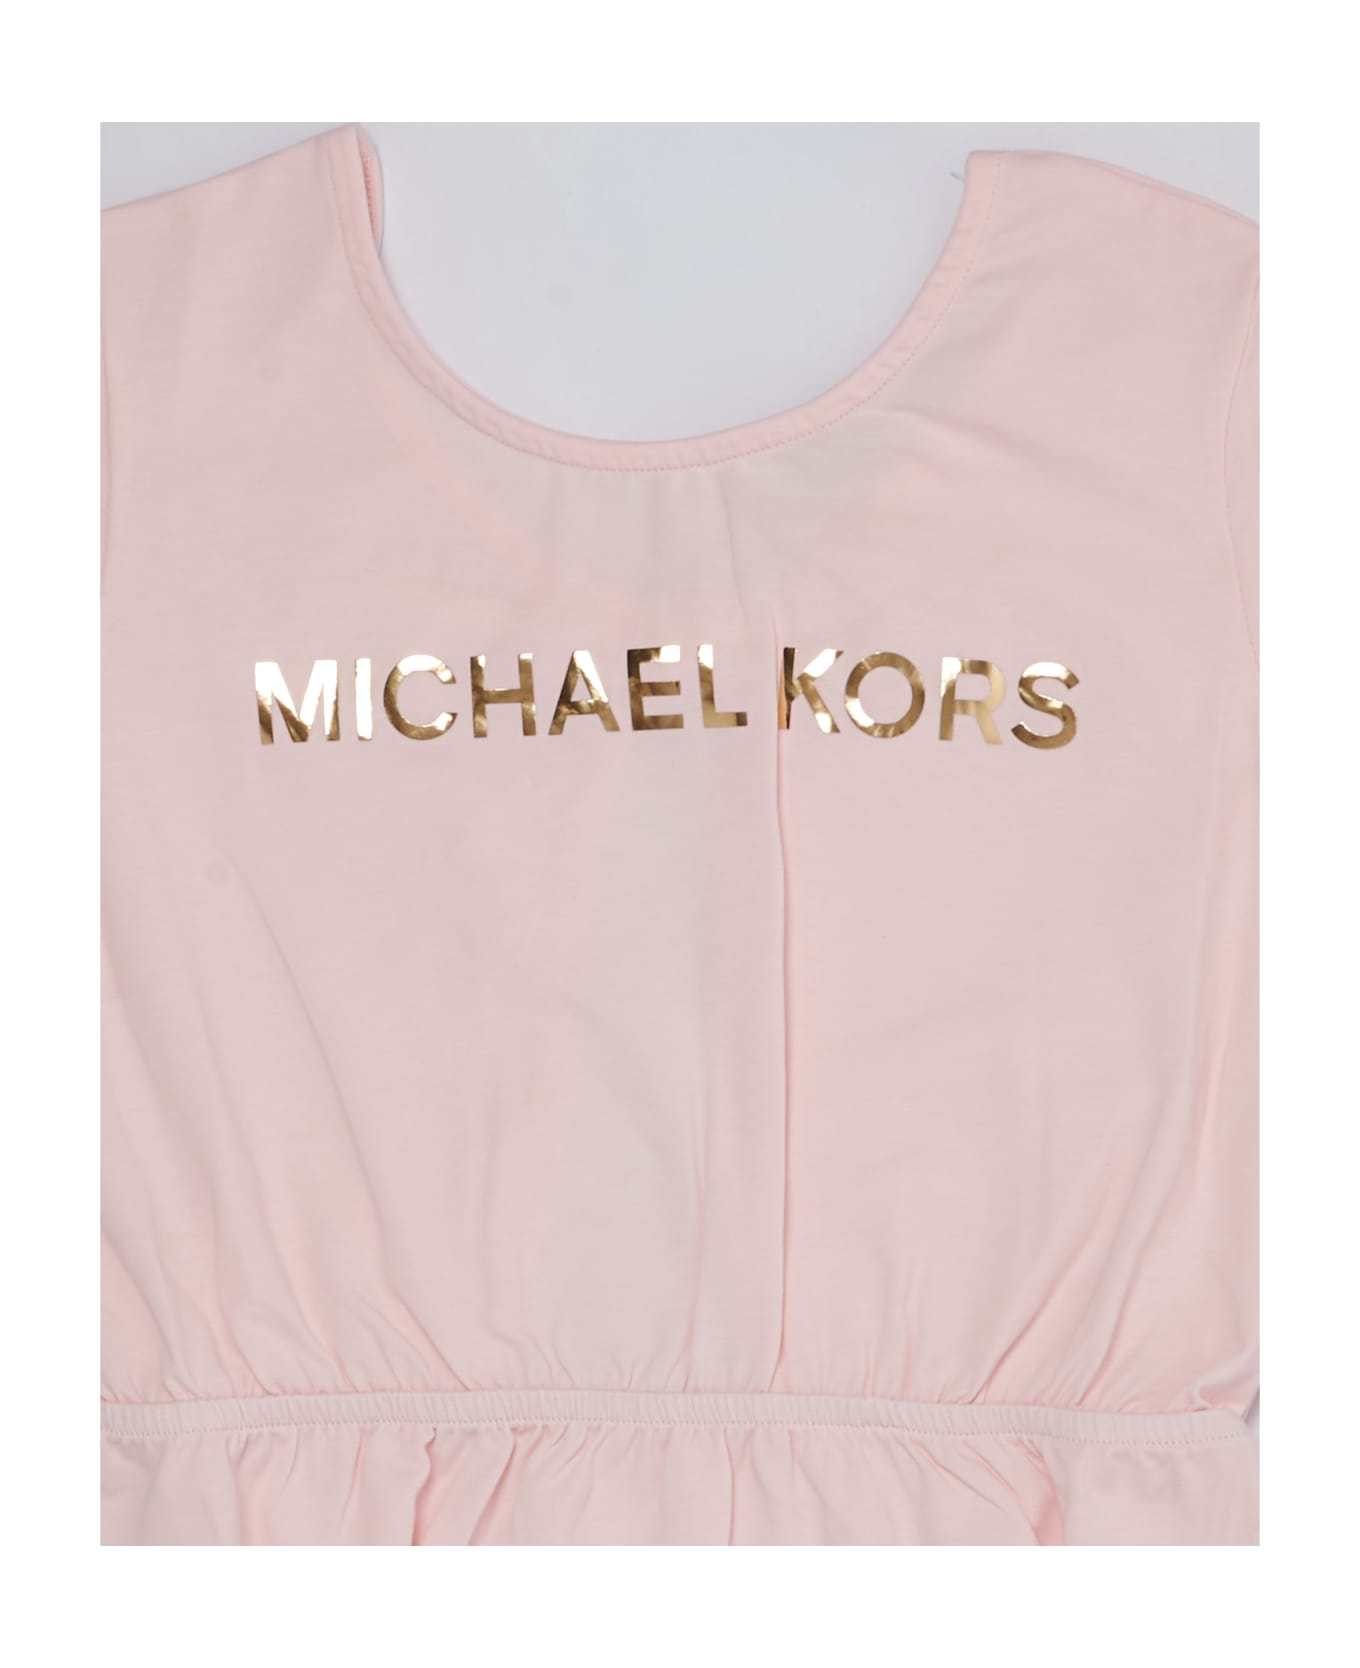 Michael Kors Dress Dress - ROSA CHIARO